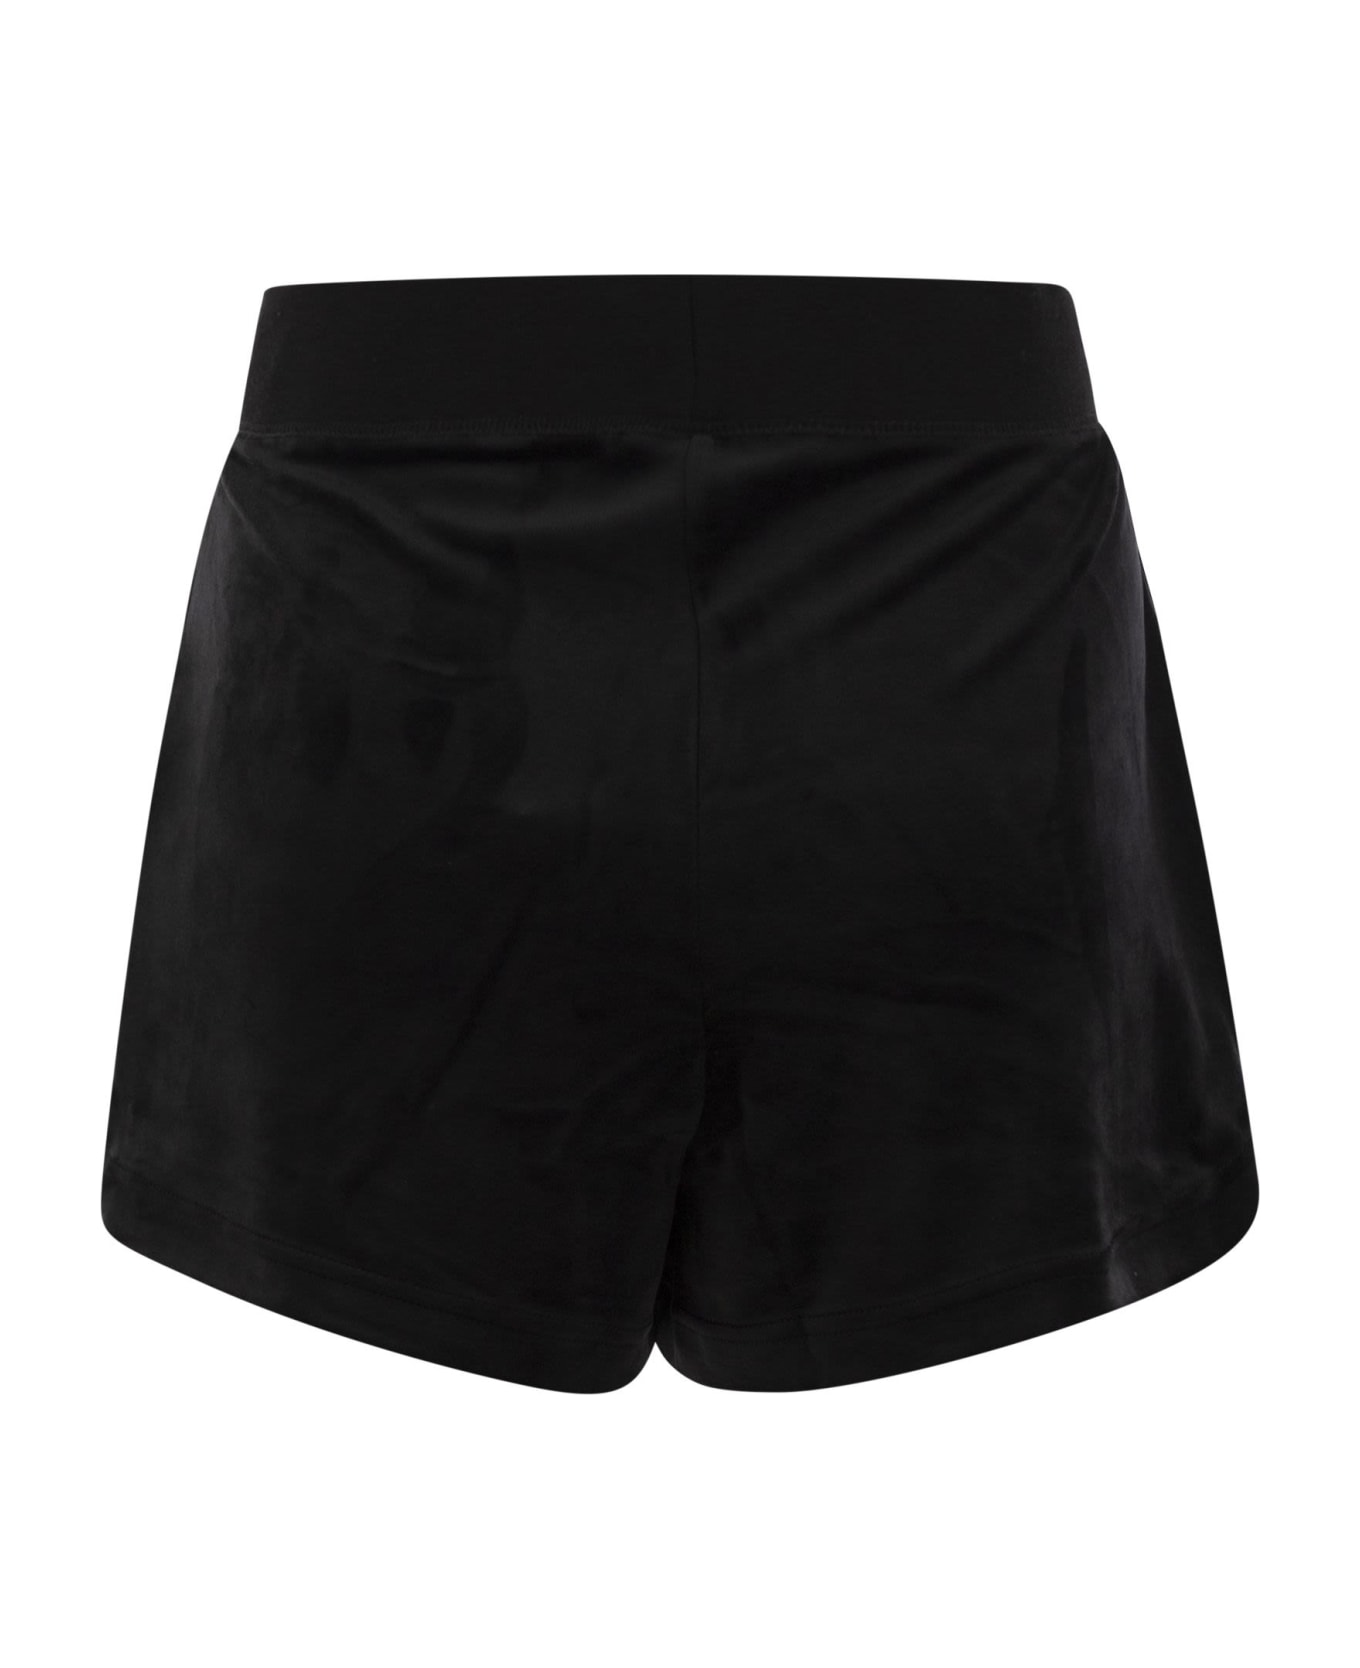 Juicy Couture Velour Shorts - Black